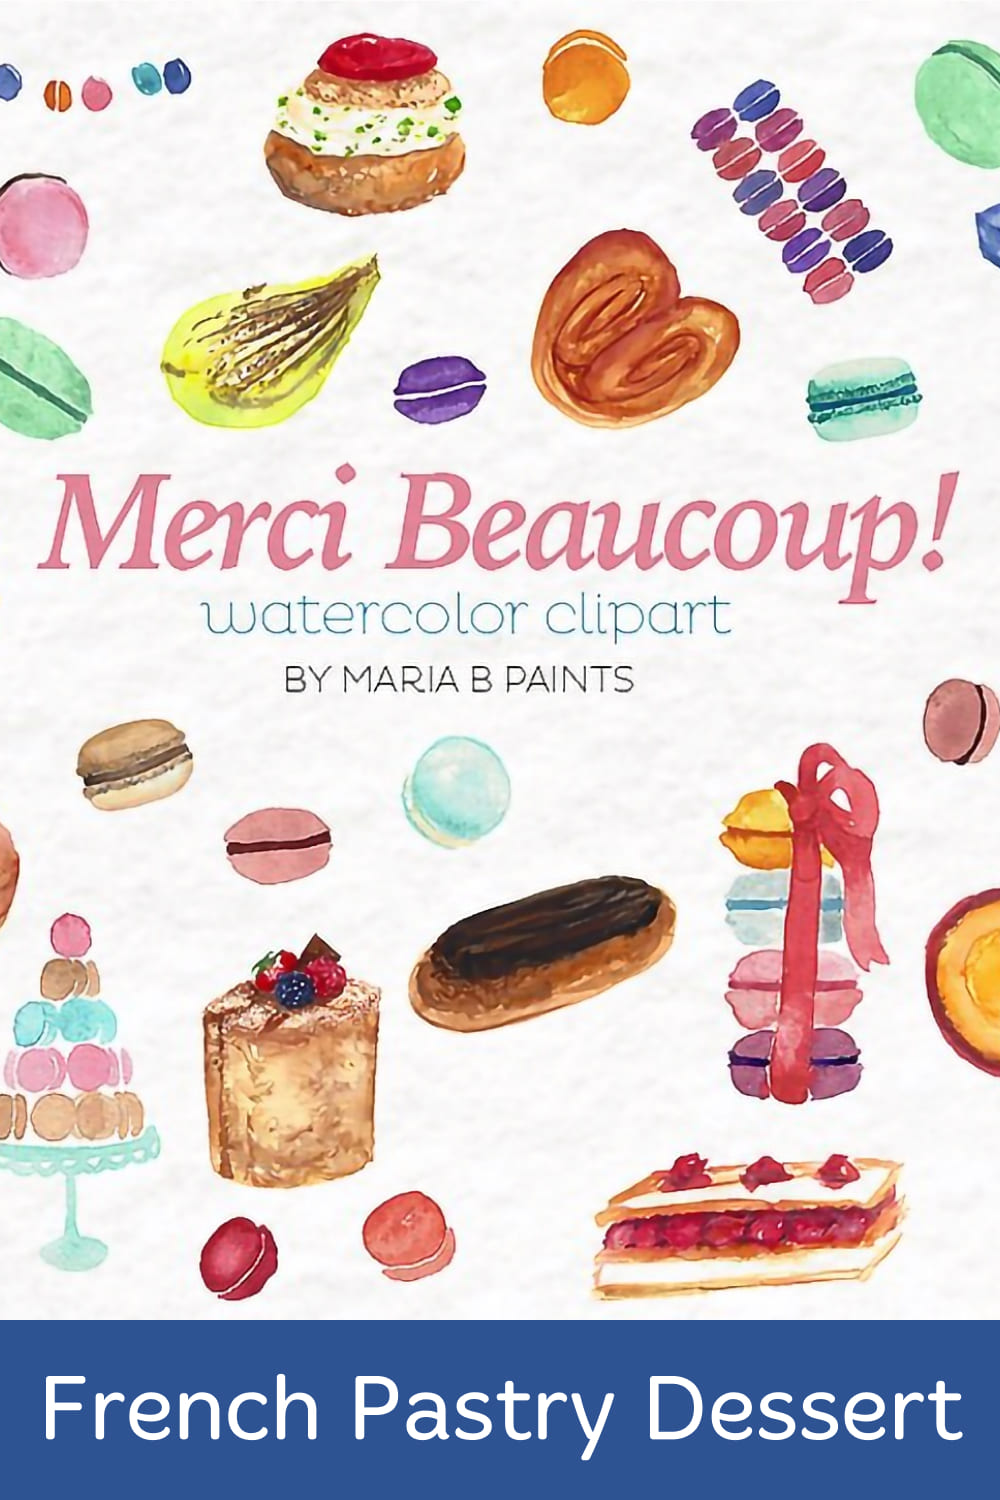 French Pastry Dessert Watercolor Clipart Bundle - Pinterest.